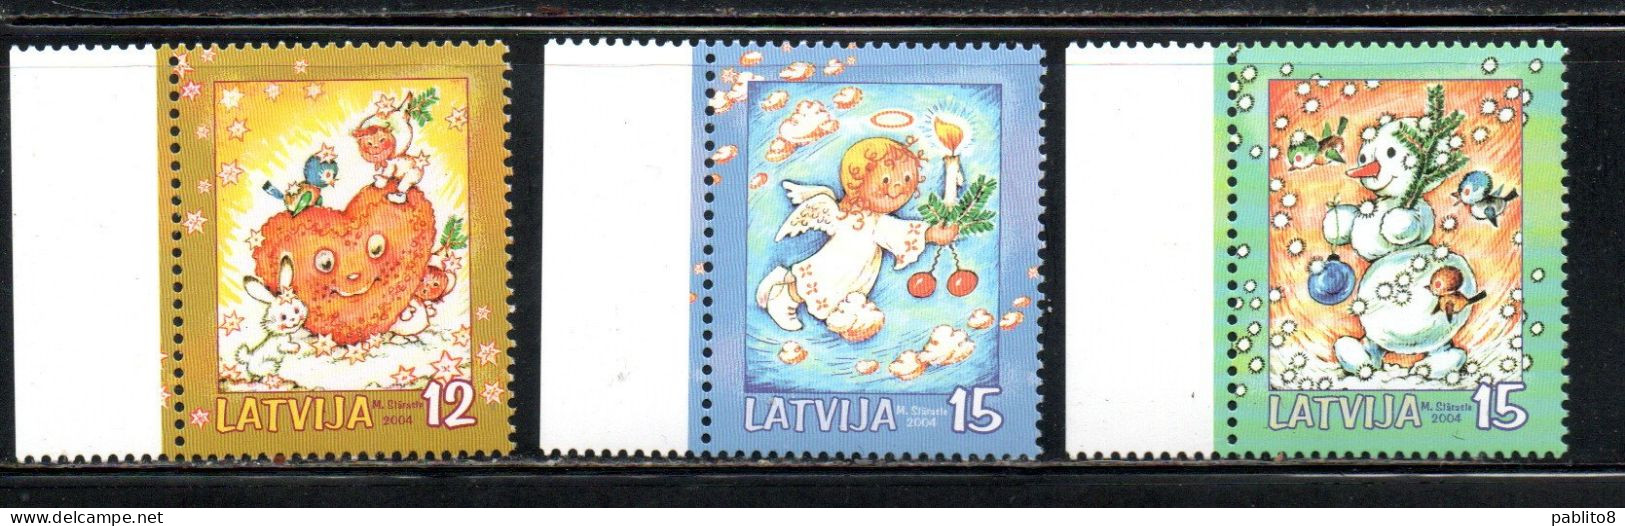 LATVIA LETTLAND LETTONIA LATVIJA 2004 CHRISTMAS NATALE NOEL WEIHNACHTEN NAVIDAD COMPLETE SET SERIE COMPLETA MNH - Letland